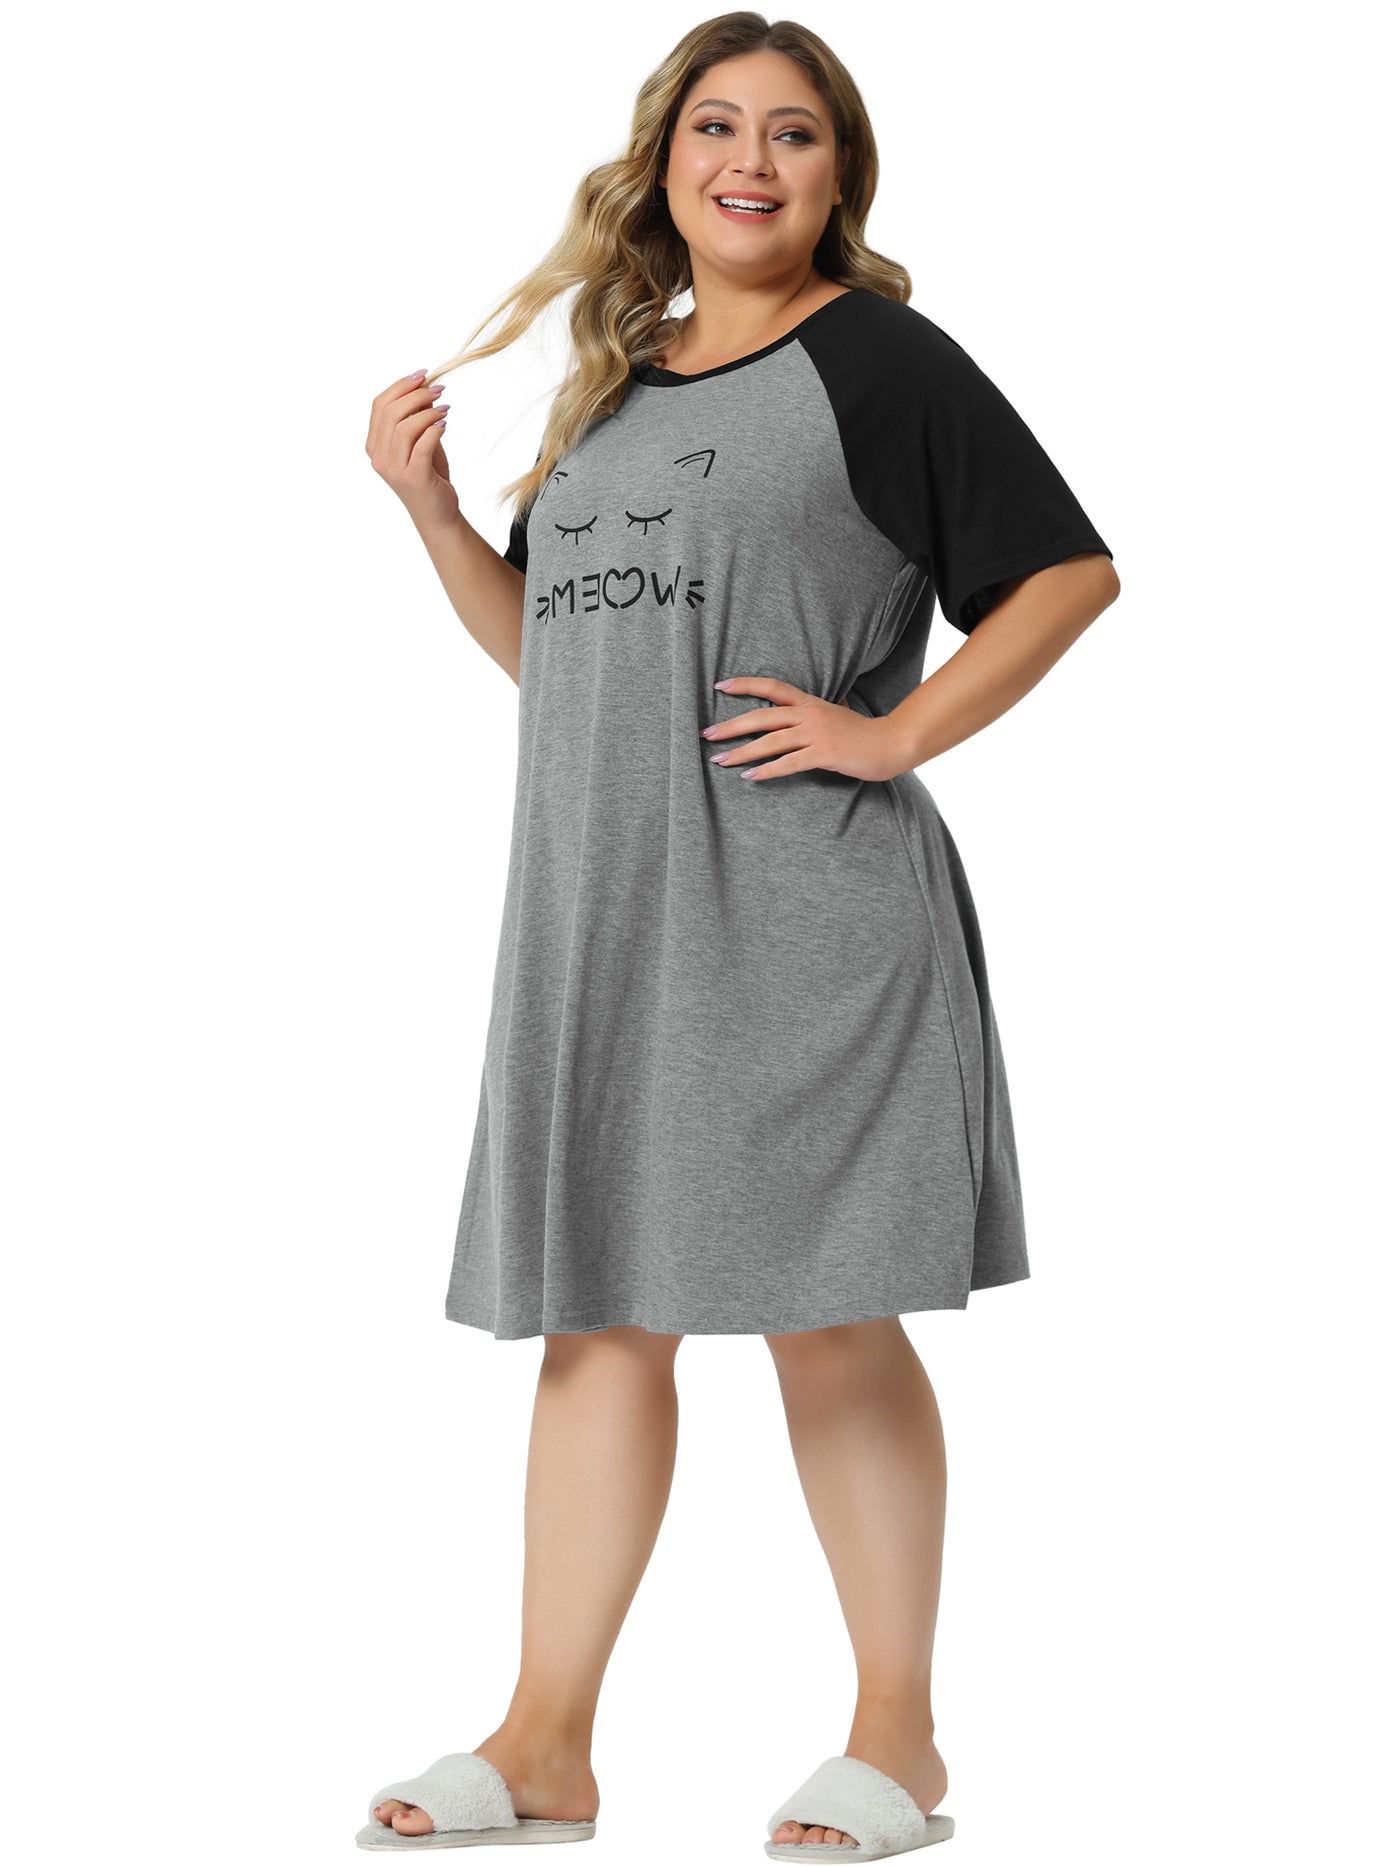 Bublédon Plus Size Nightgown for Women Short Sleeve Cute Graphic Sleepshirts Lounge Sleep Dress Sleepwear